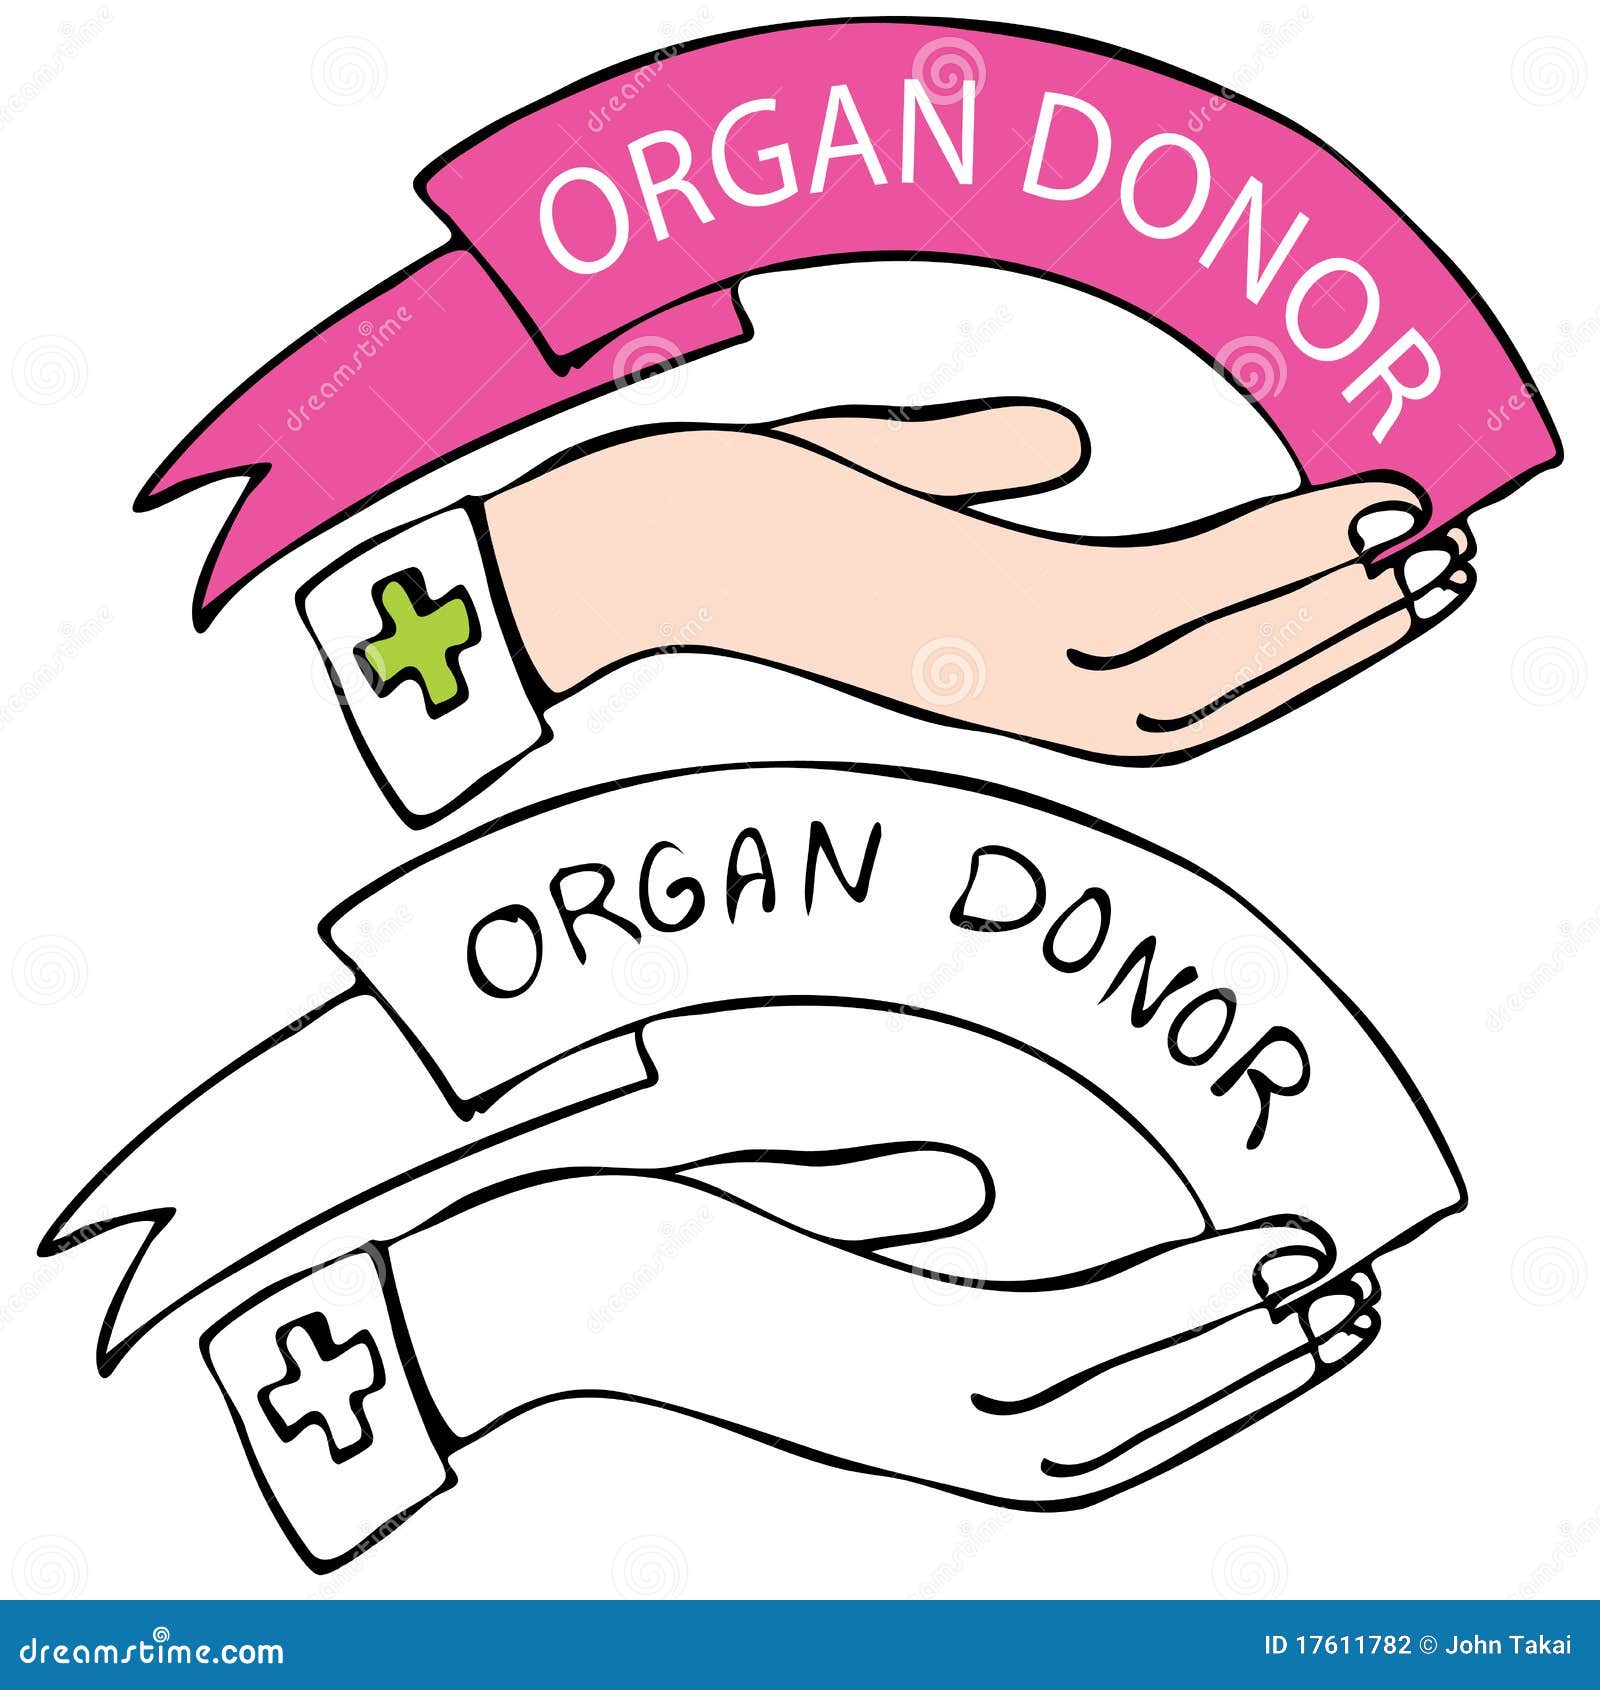 organ donor clipart - photo #7